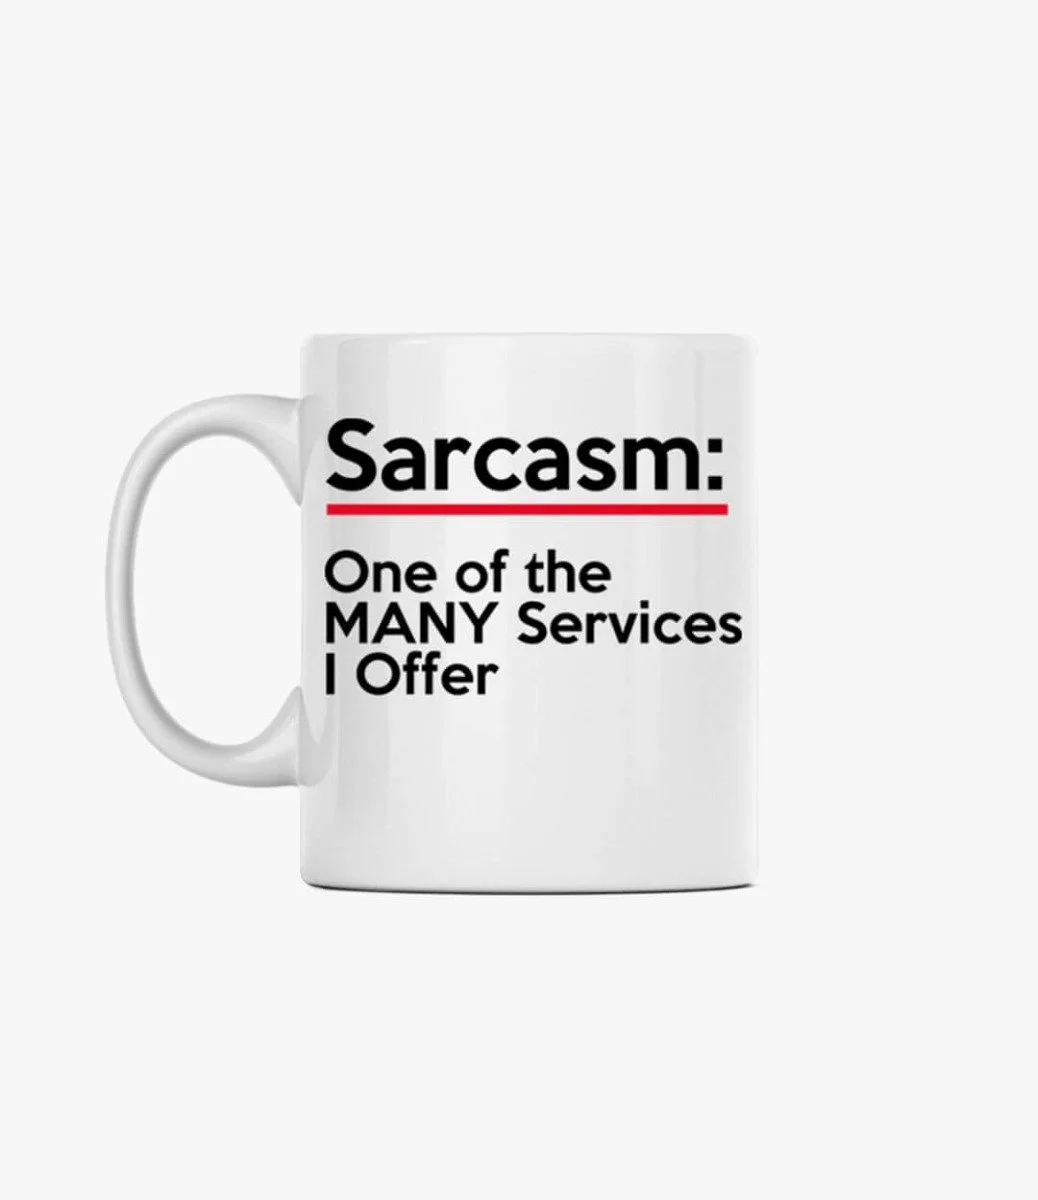 Sarcasm: One of the MANY Services I Offer Mug